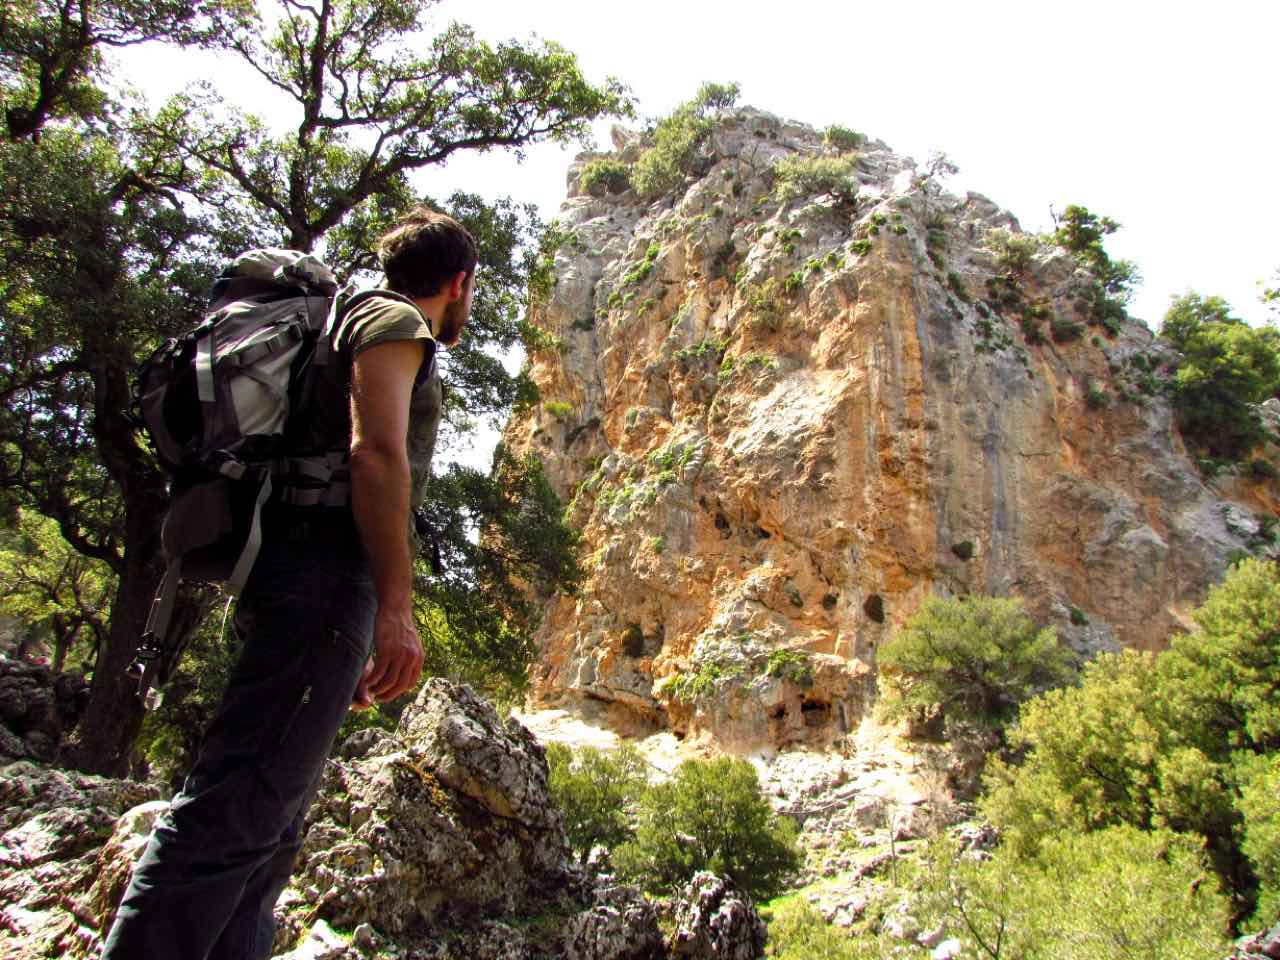 Neraidogoula The Legendary Cave In Lassithi Mountain Range, caving east crete, caving activity crete, crete activities, neraidogoula cave crete, things to do crete, best activities crete